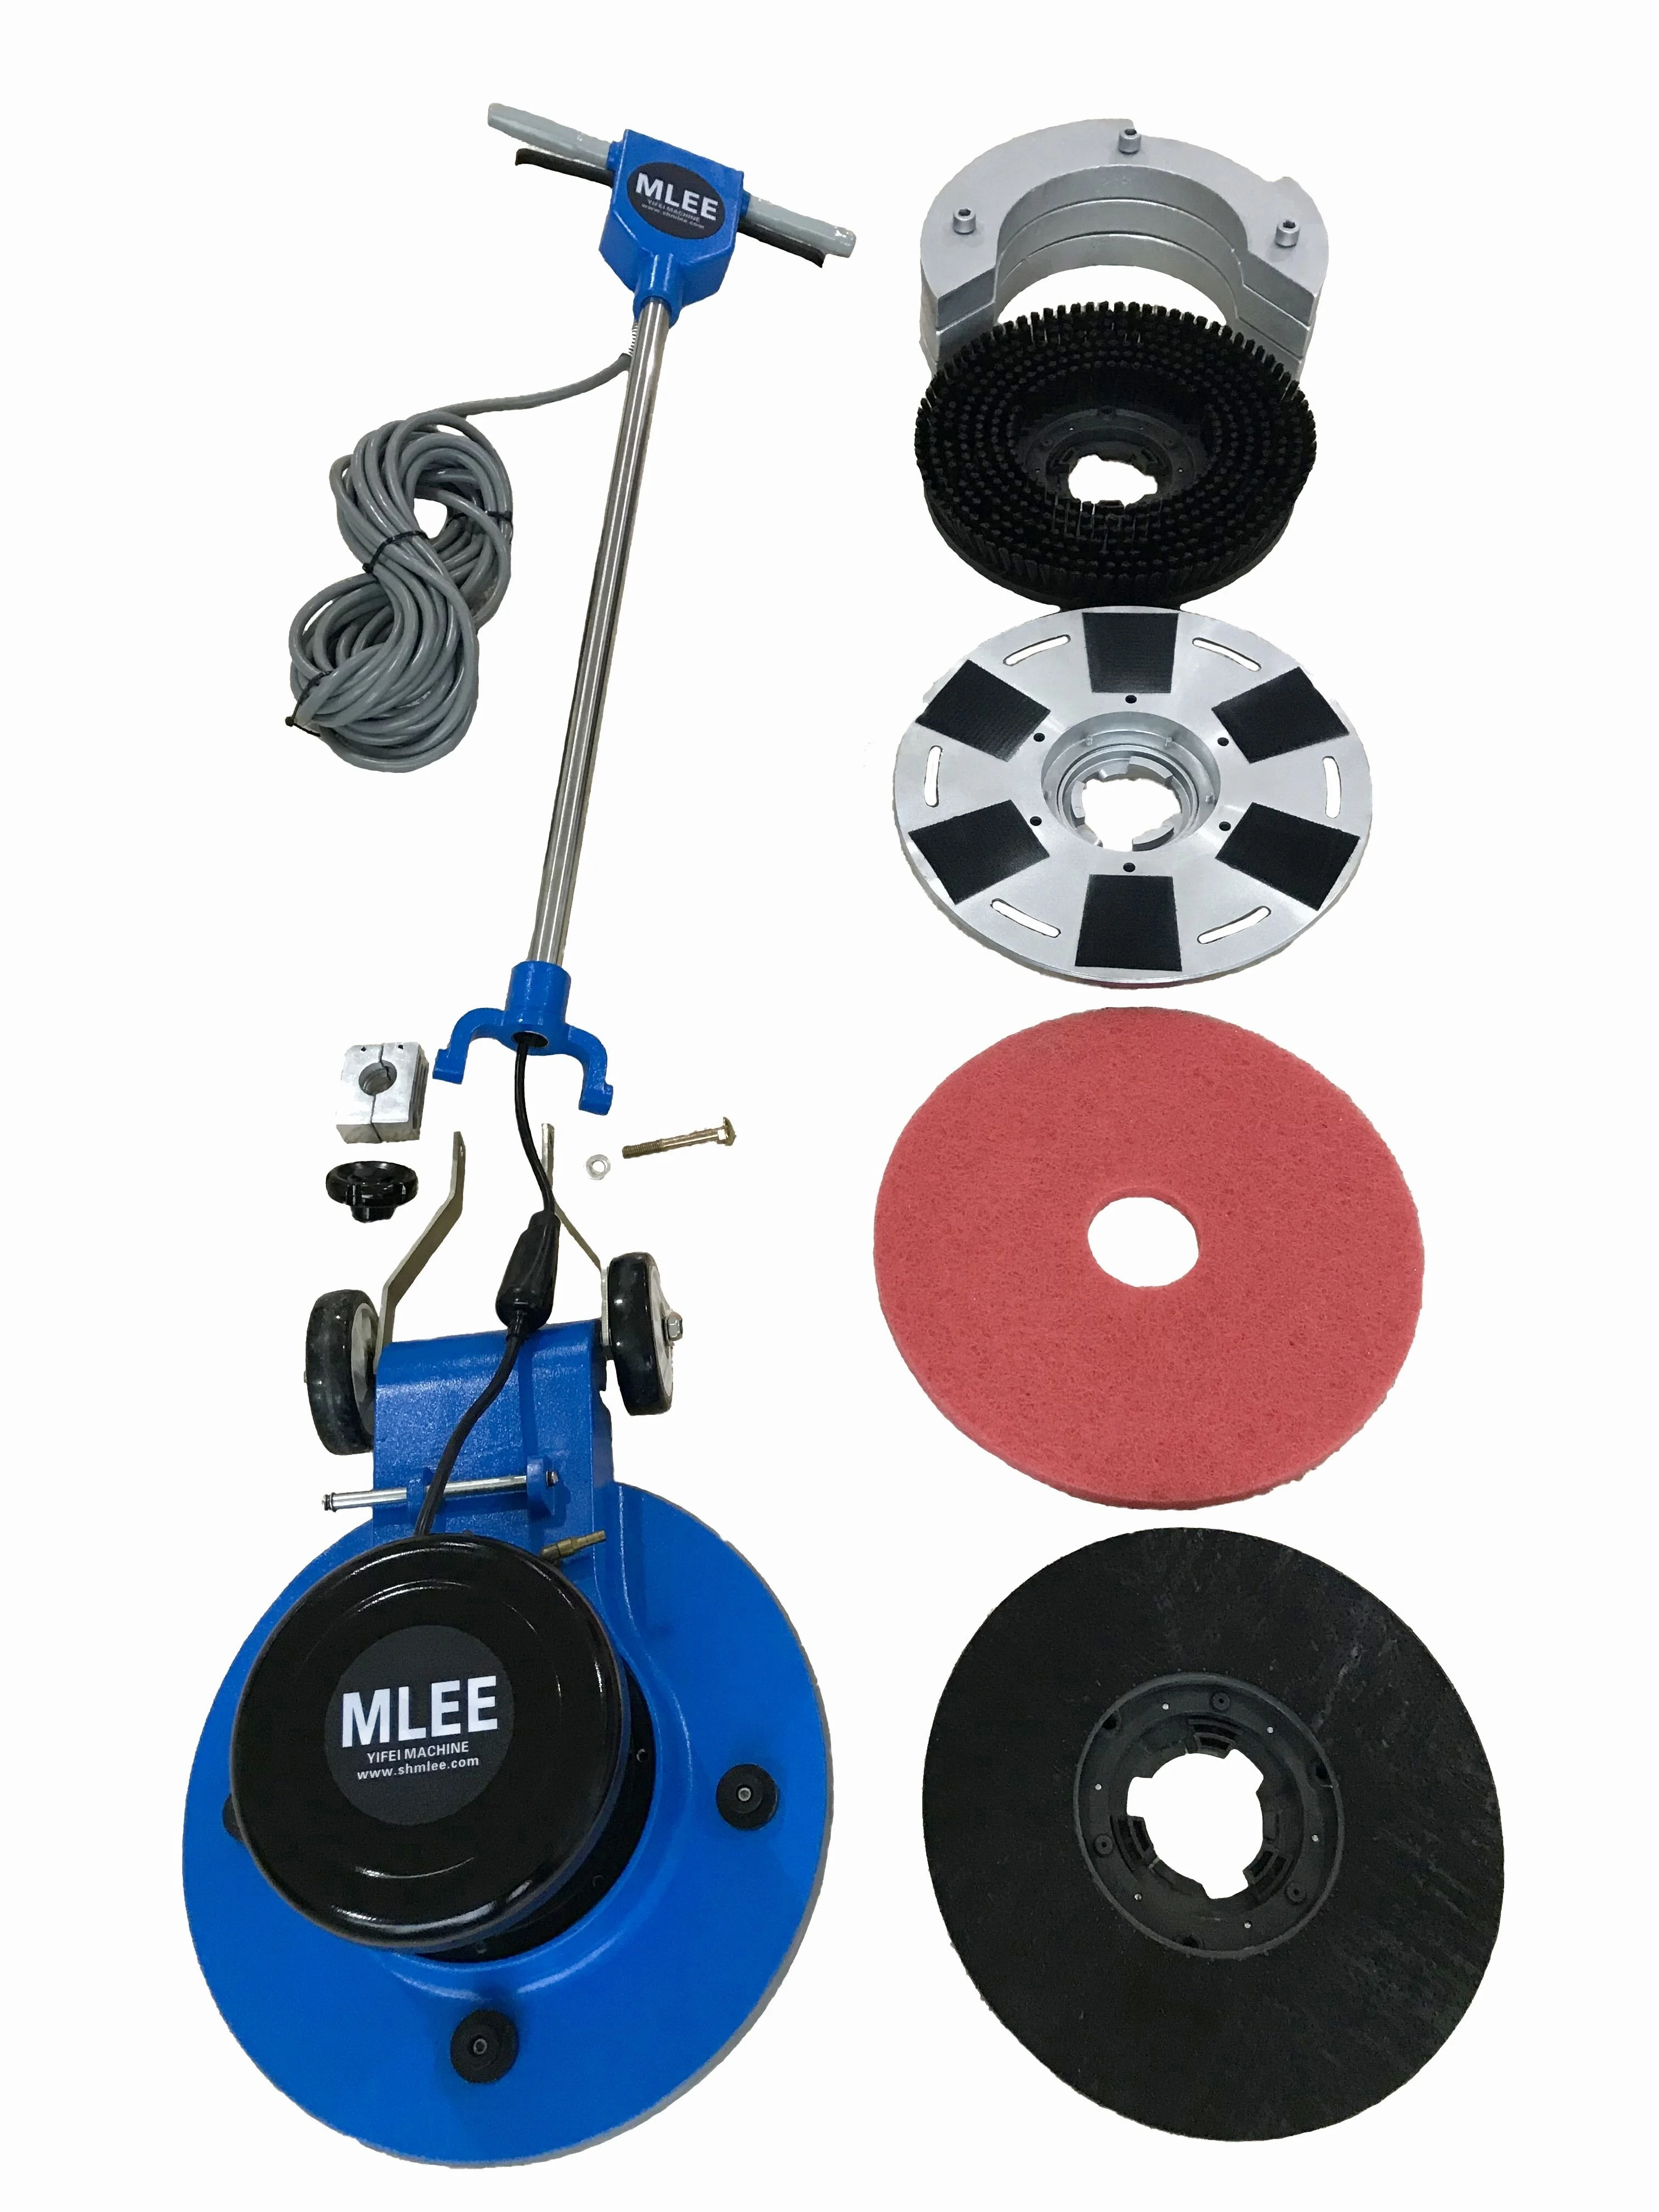 MLEE-170C Industrial Floor Cleaning Machine Tiles Grout Commercial Manual Walk Behind Marble Floor Scrubber